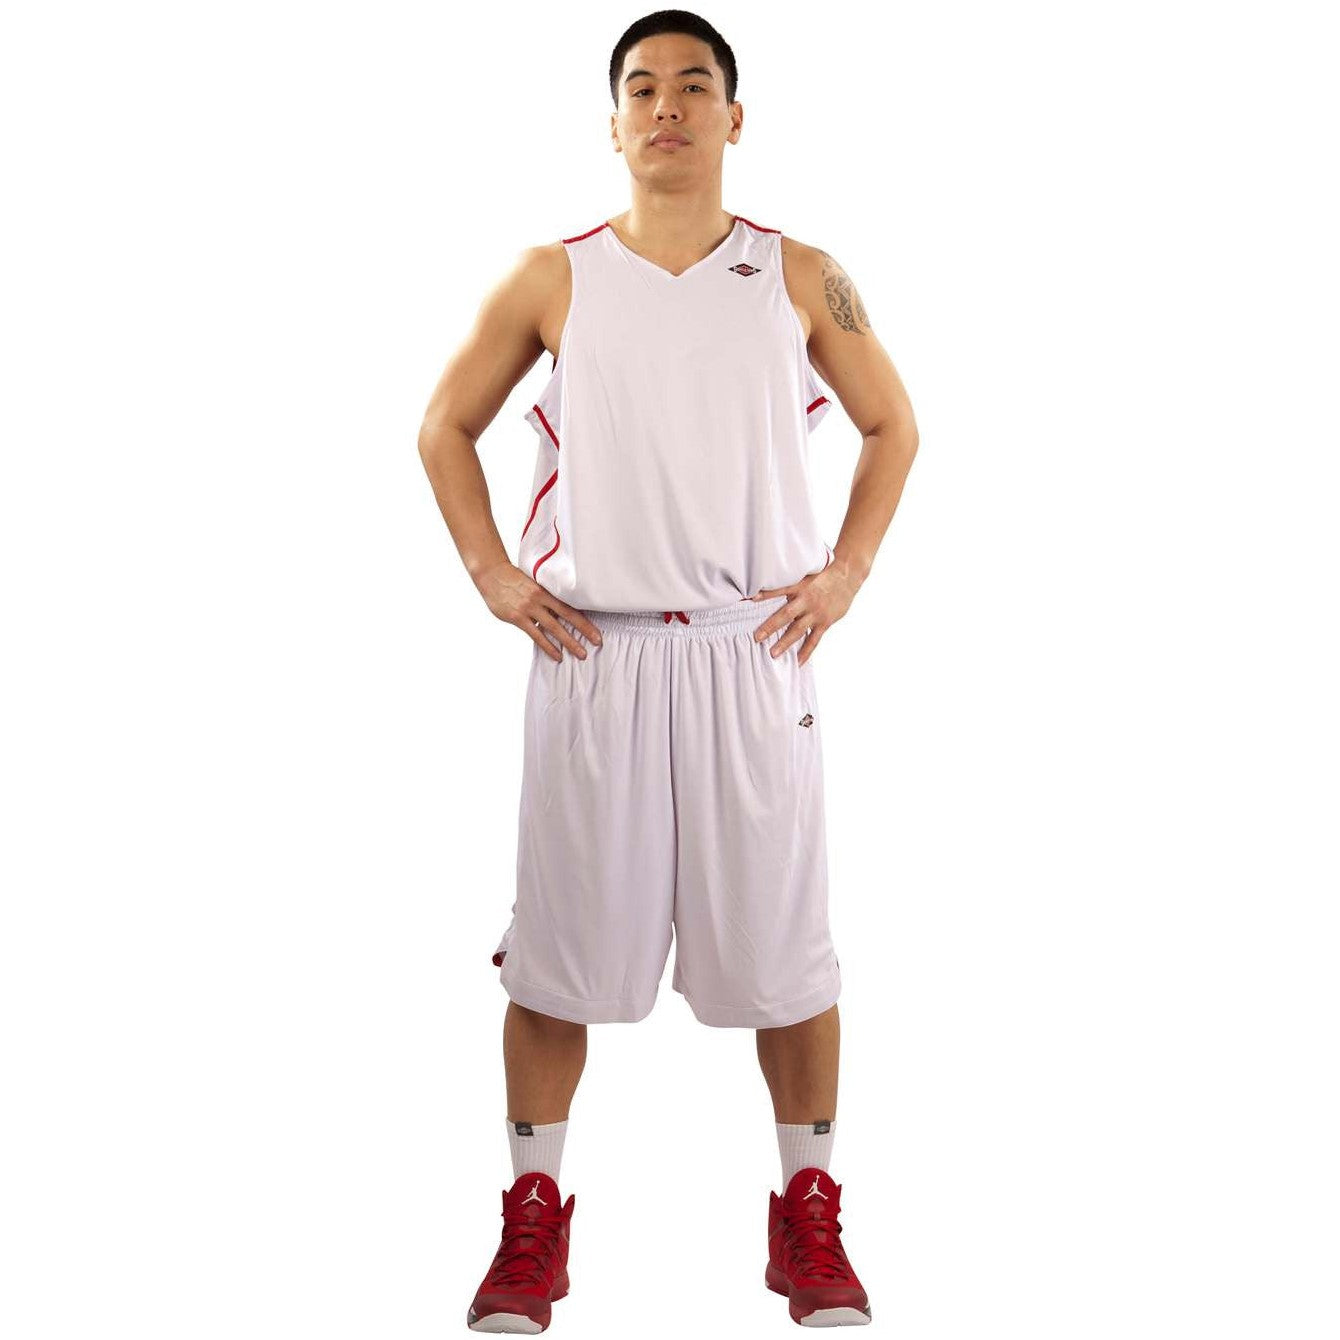 Shirts & Skins Scarlet/White League Reversible Basketball Uniform